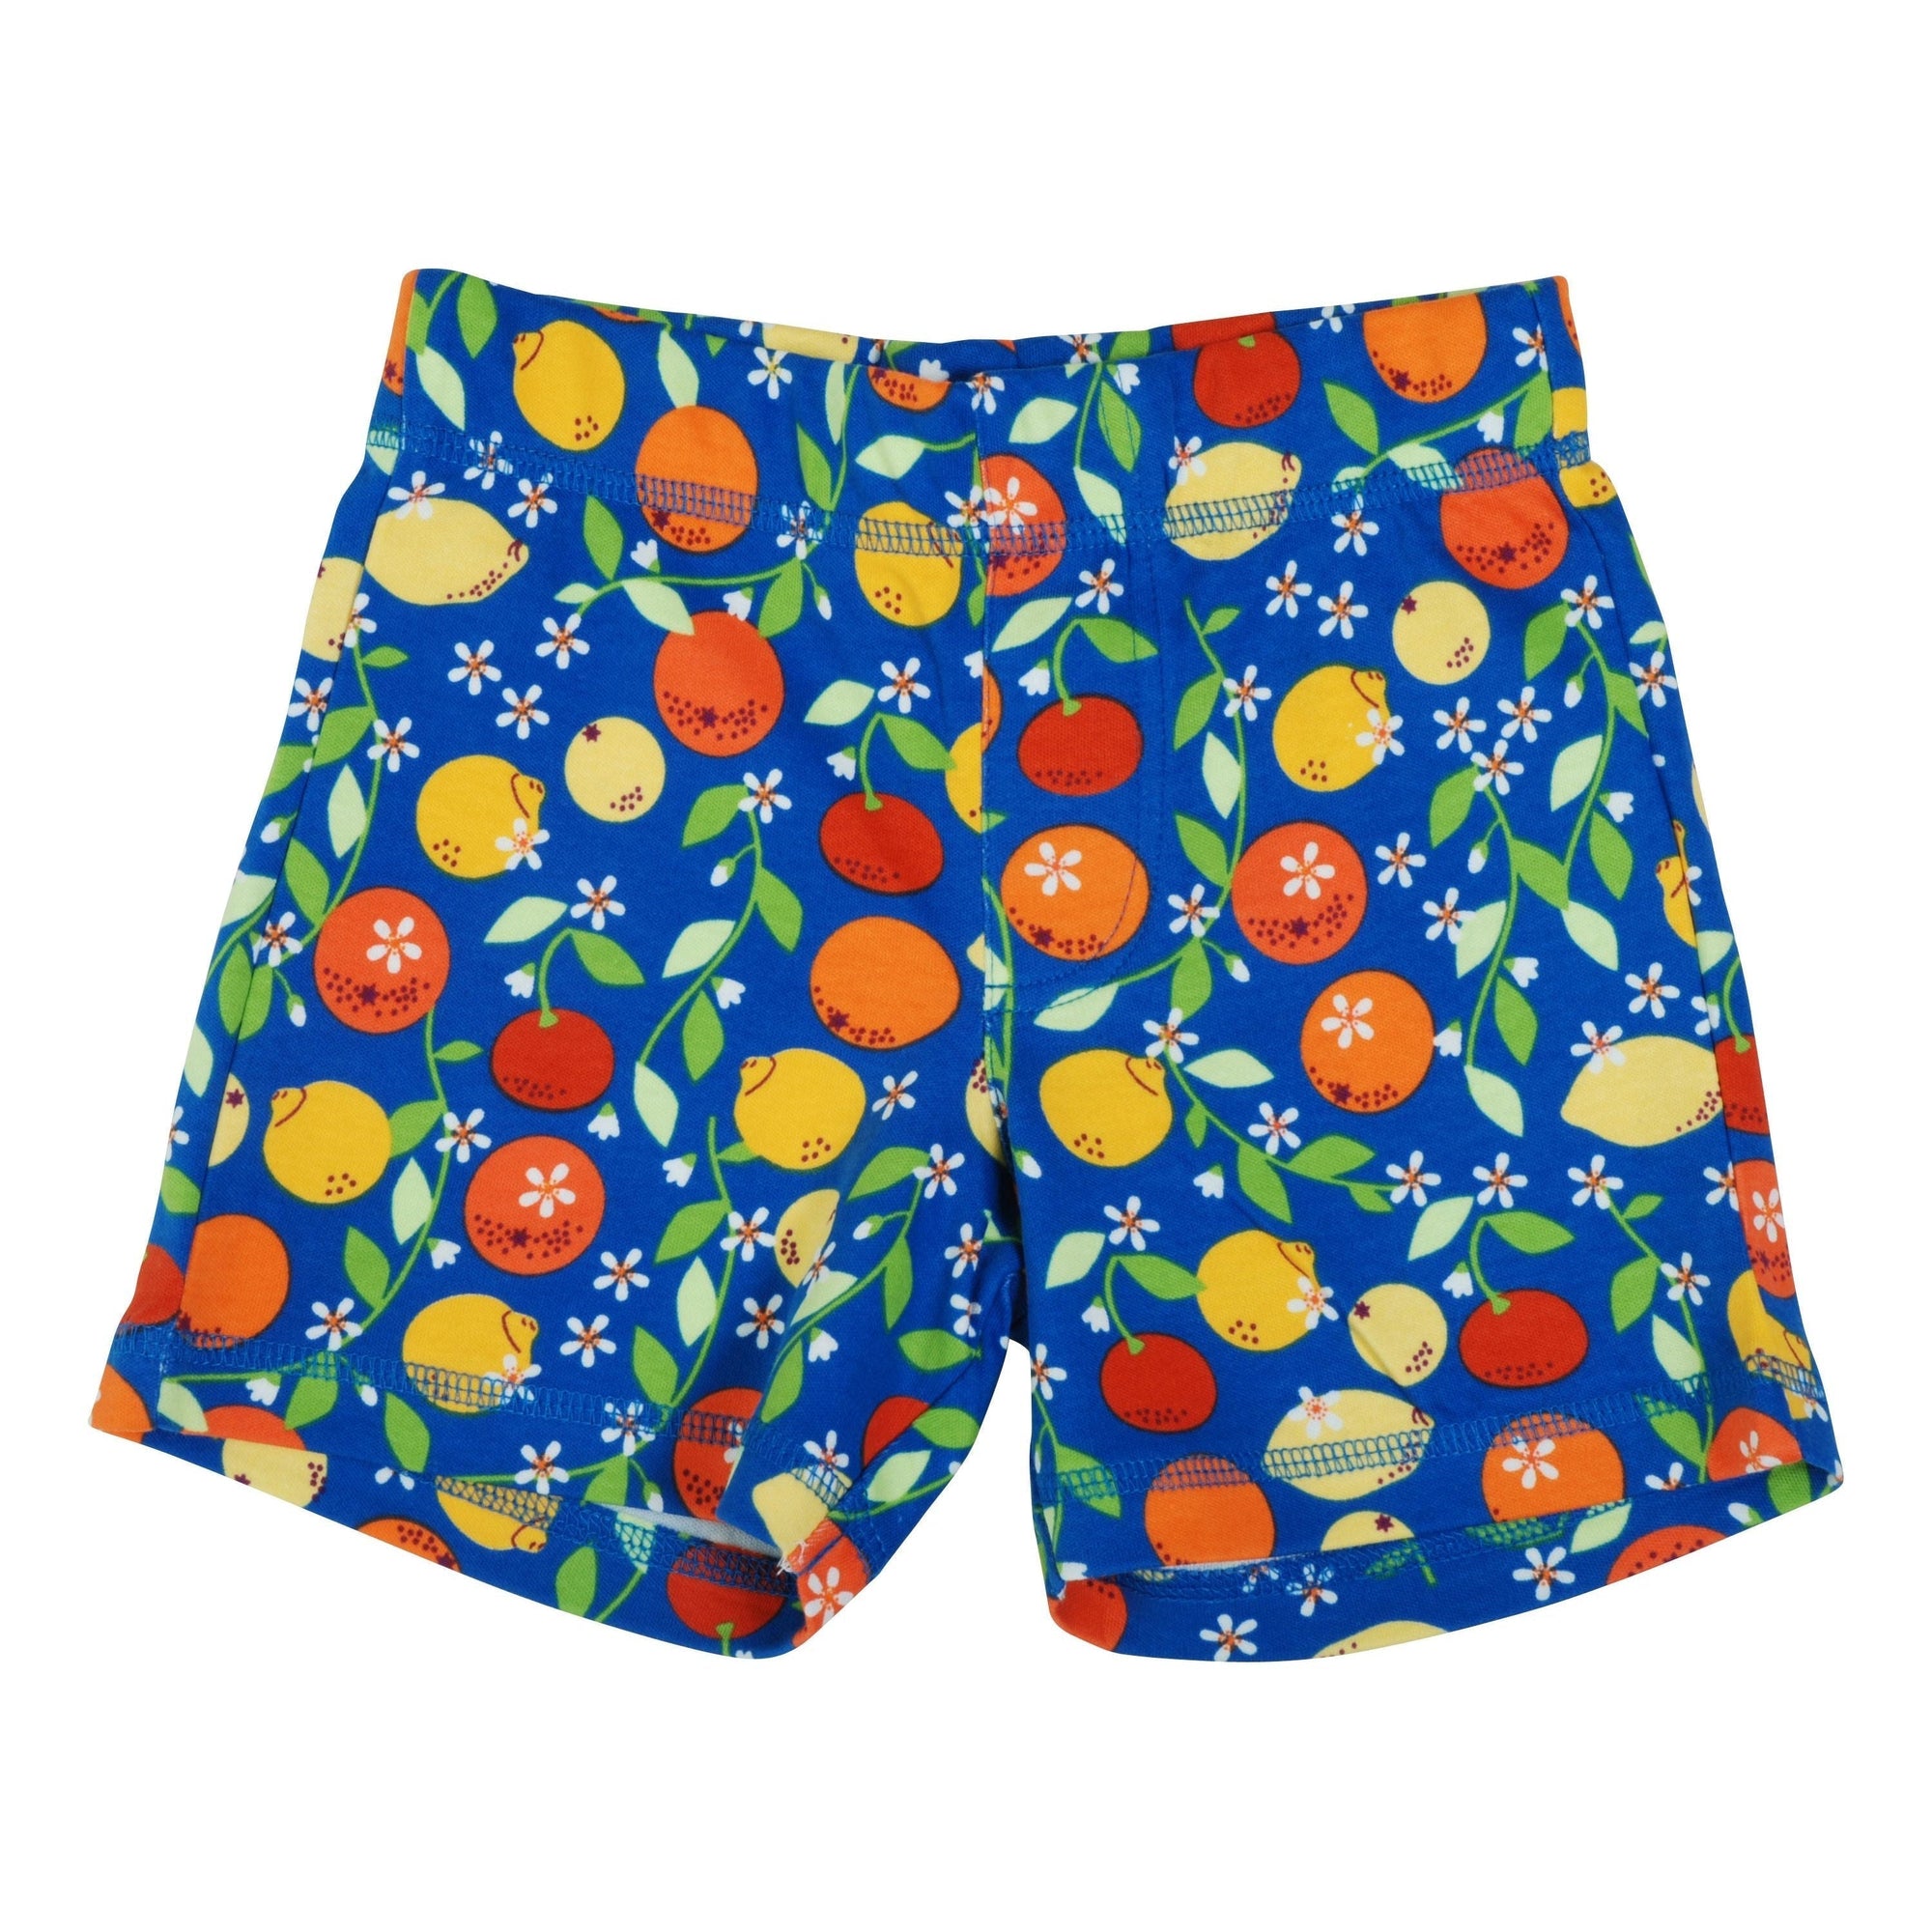 Citrus - Blue Shorts - 1 Left Size 12-14 years-Duns Sweden-Modern Rascals